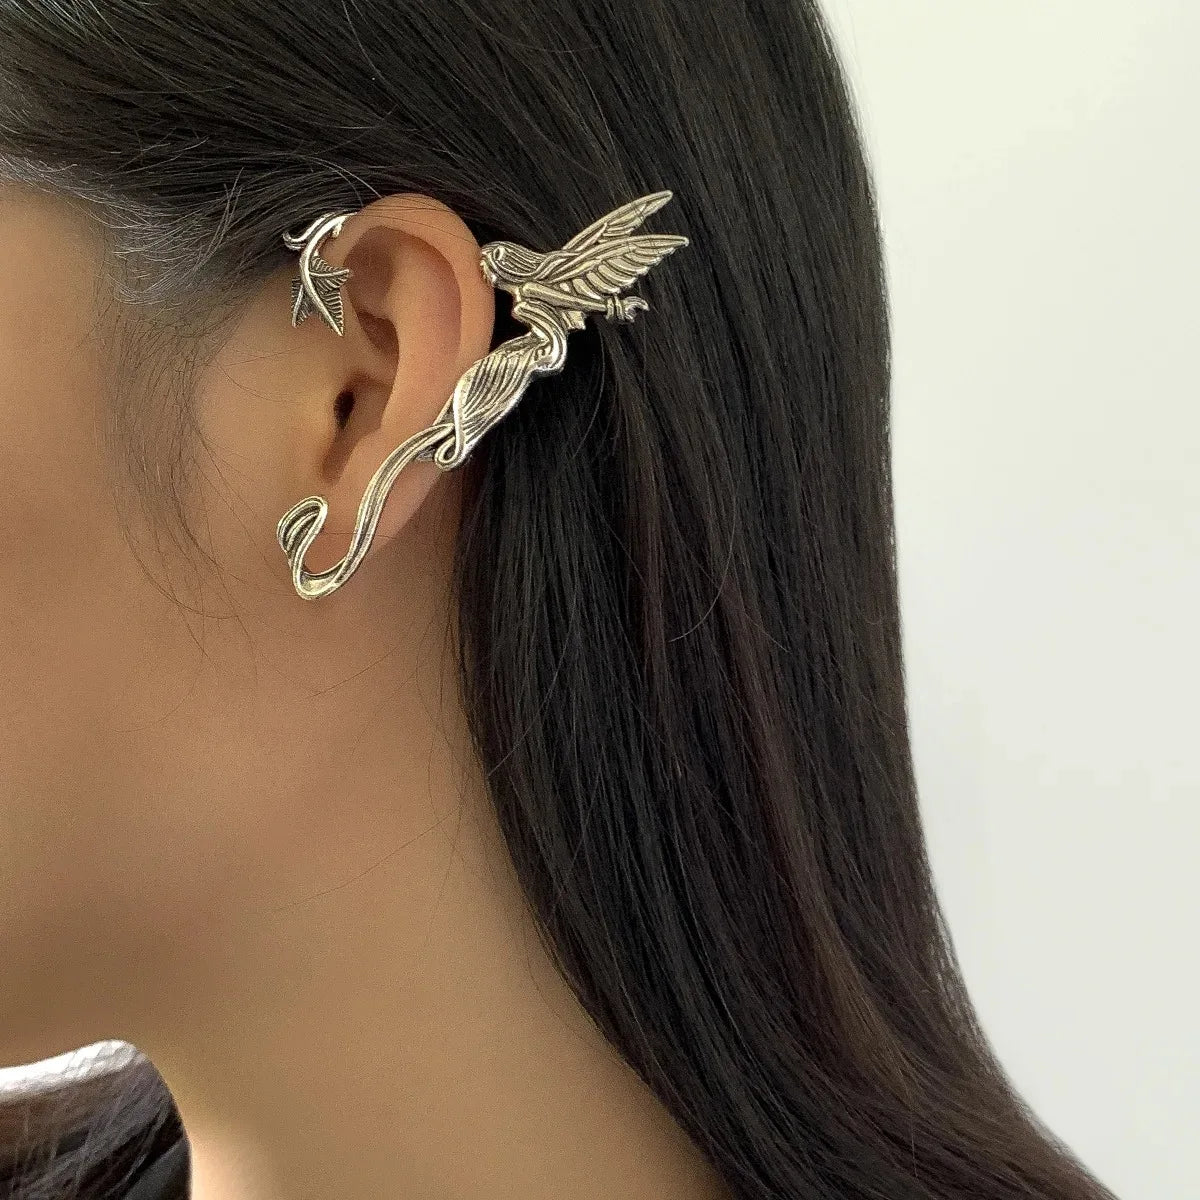 Mythical Retro Dragon Earrings - Mythical Pieces 13 left ear